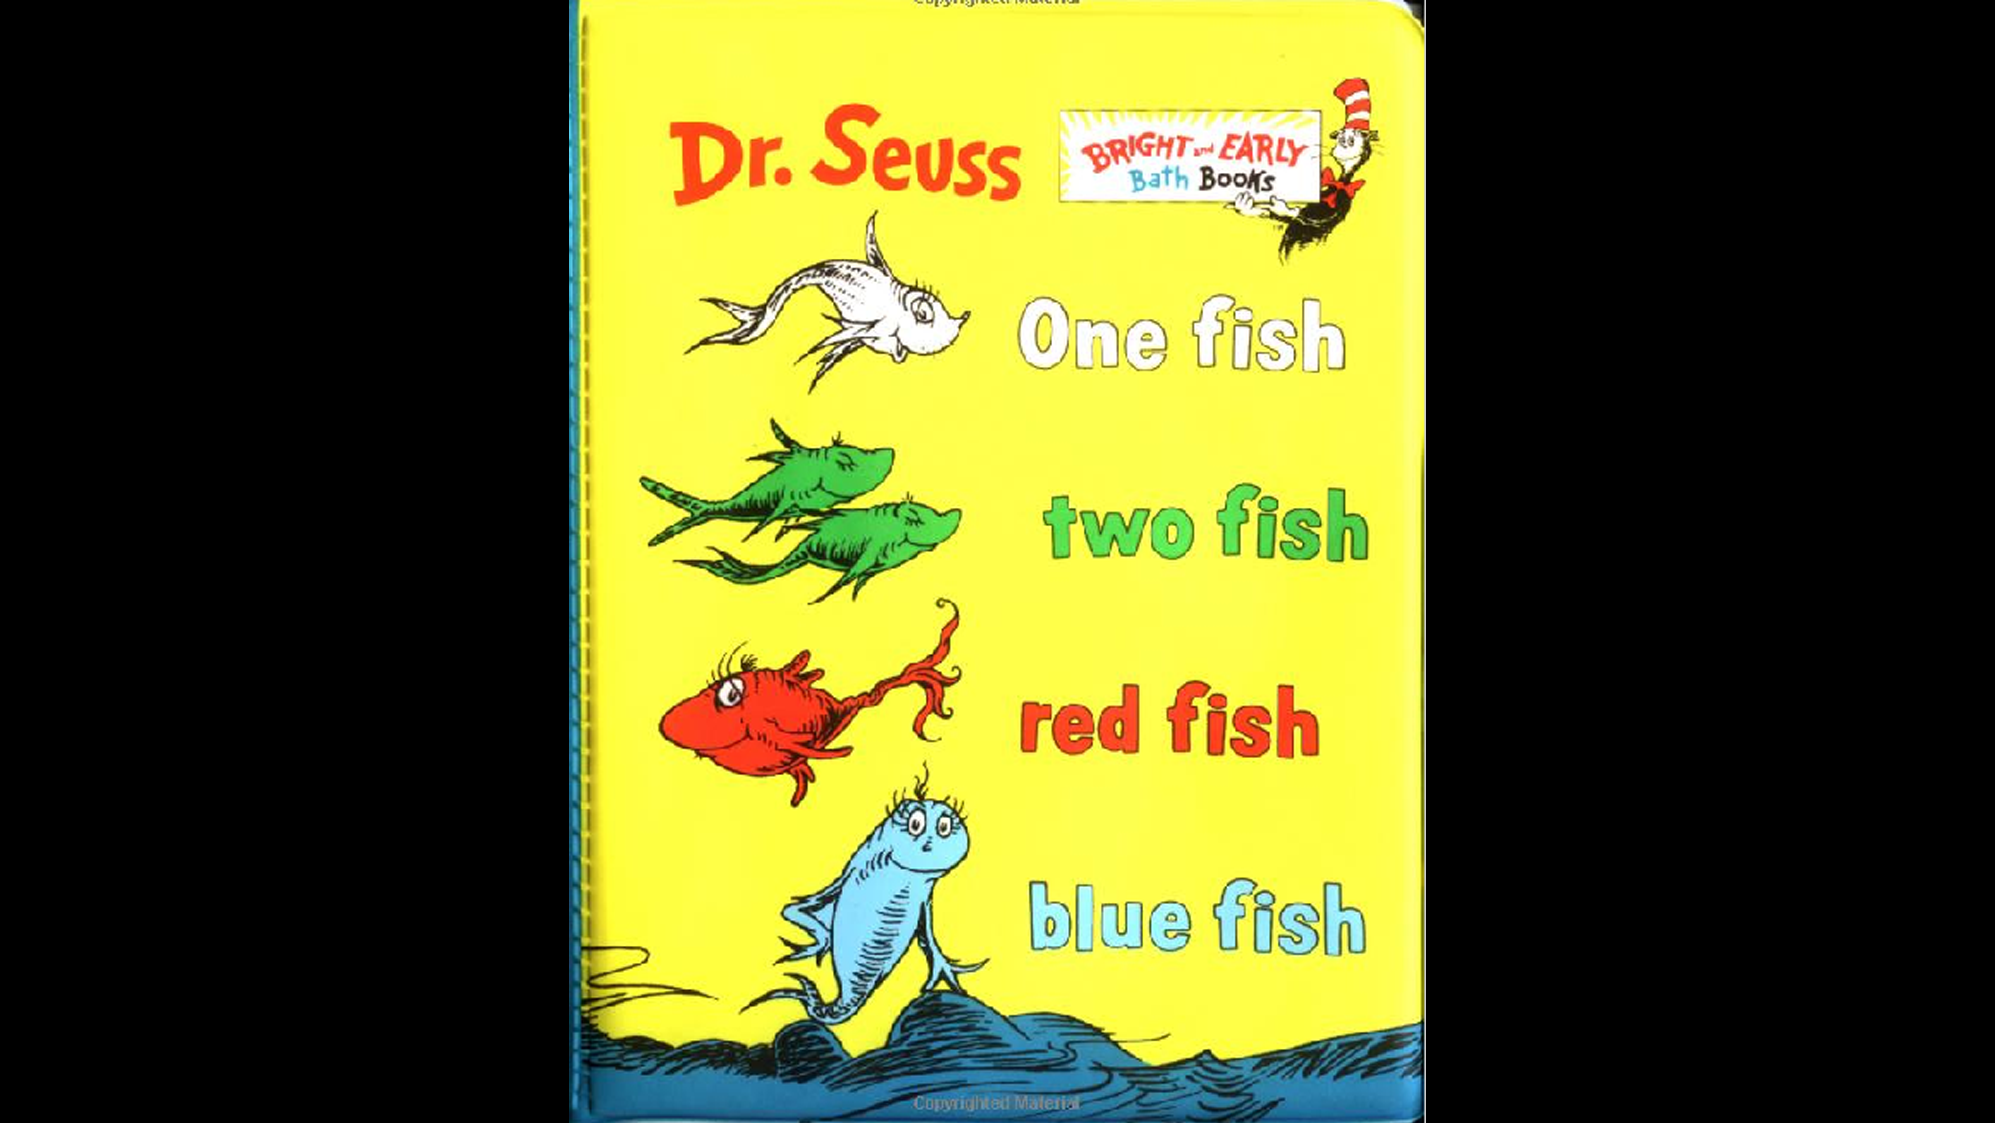 Dr. Seuss: A poem to celebrate Theodor Seuss Geisel’s birthday | CNN